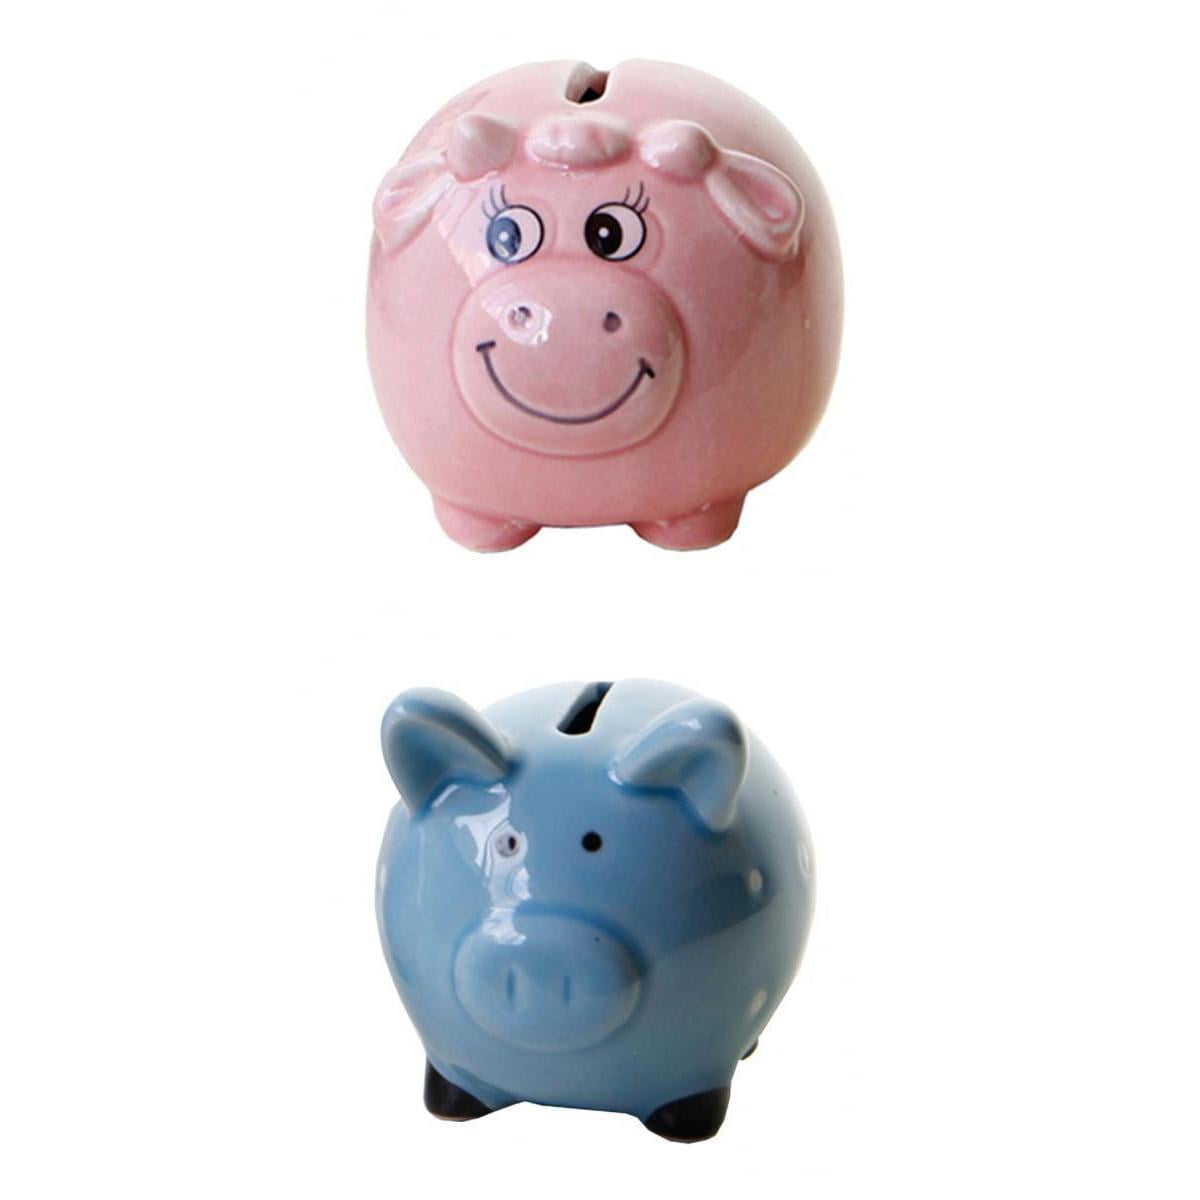 Piggy Bank Sheep &Pig Shaped Money Saving Box Toy Bank for Kids Gaming 